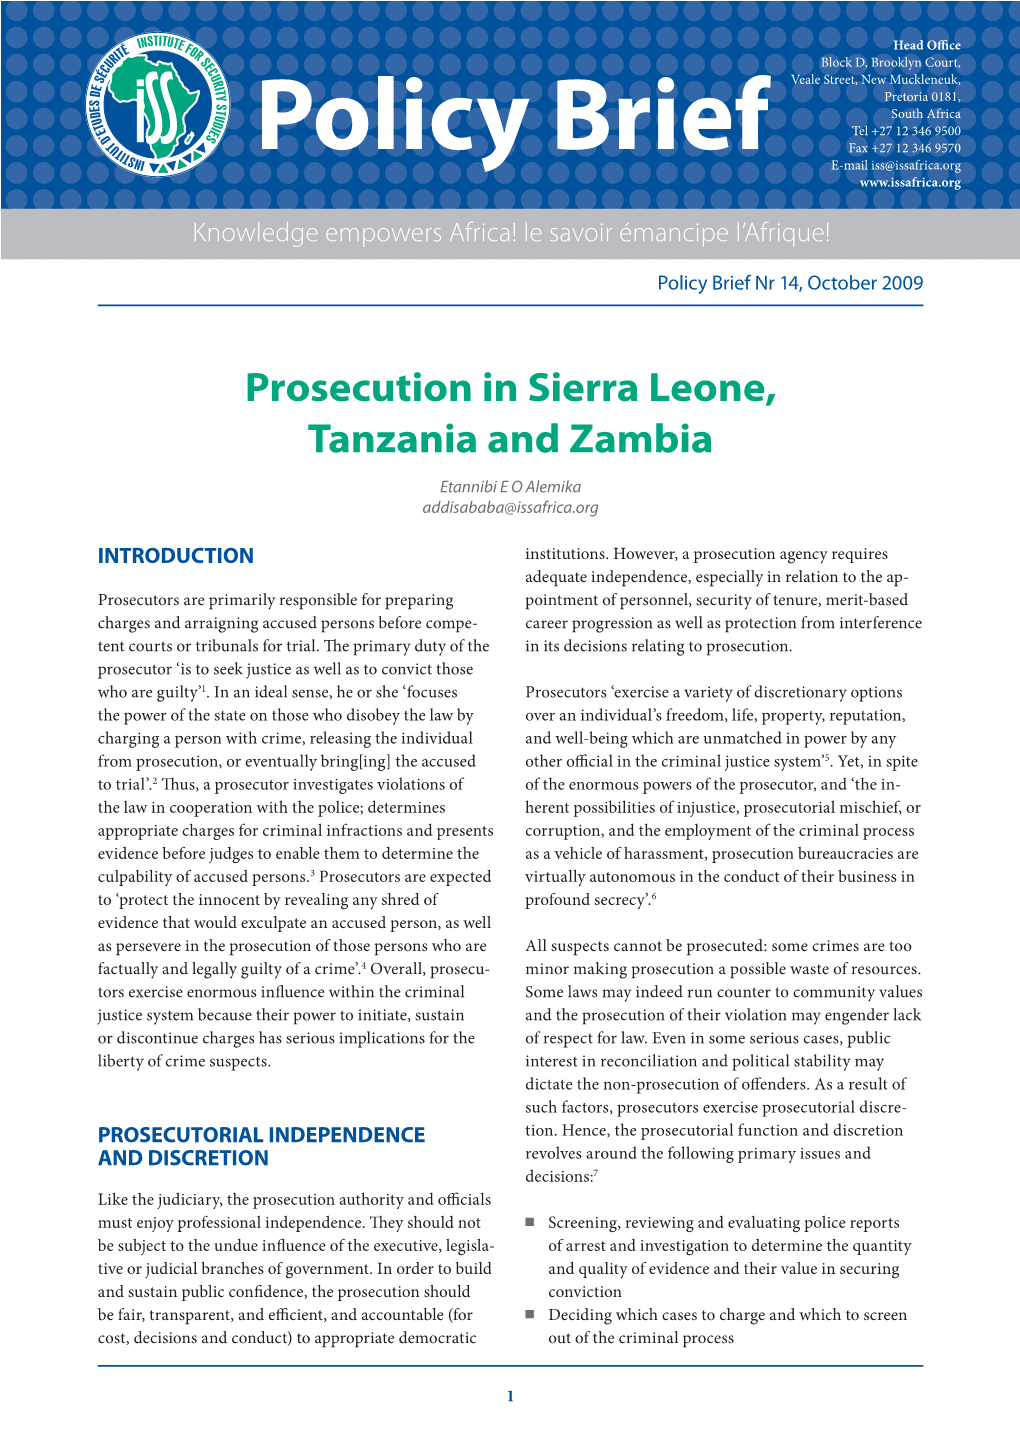 Prosecution in Sierra Leone, Tanzania and Zambia